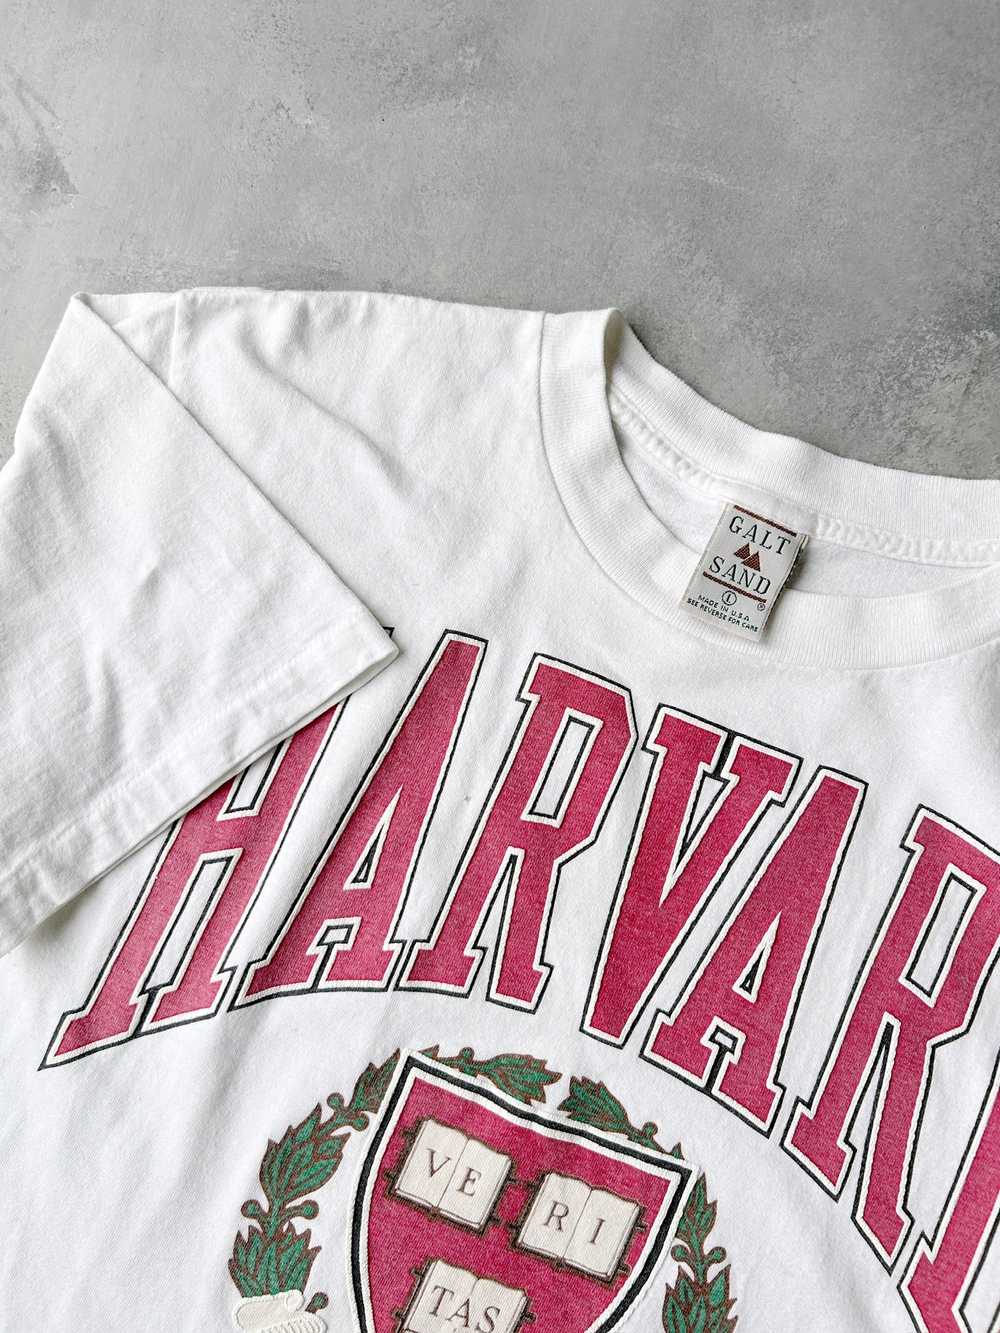 Harvard University T-Shirt 90's - Large - image 2